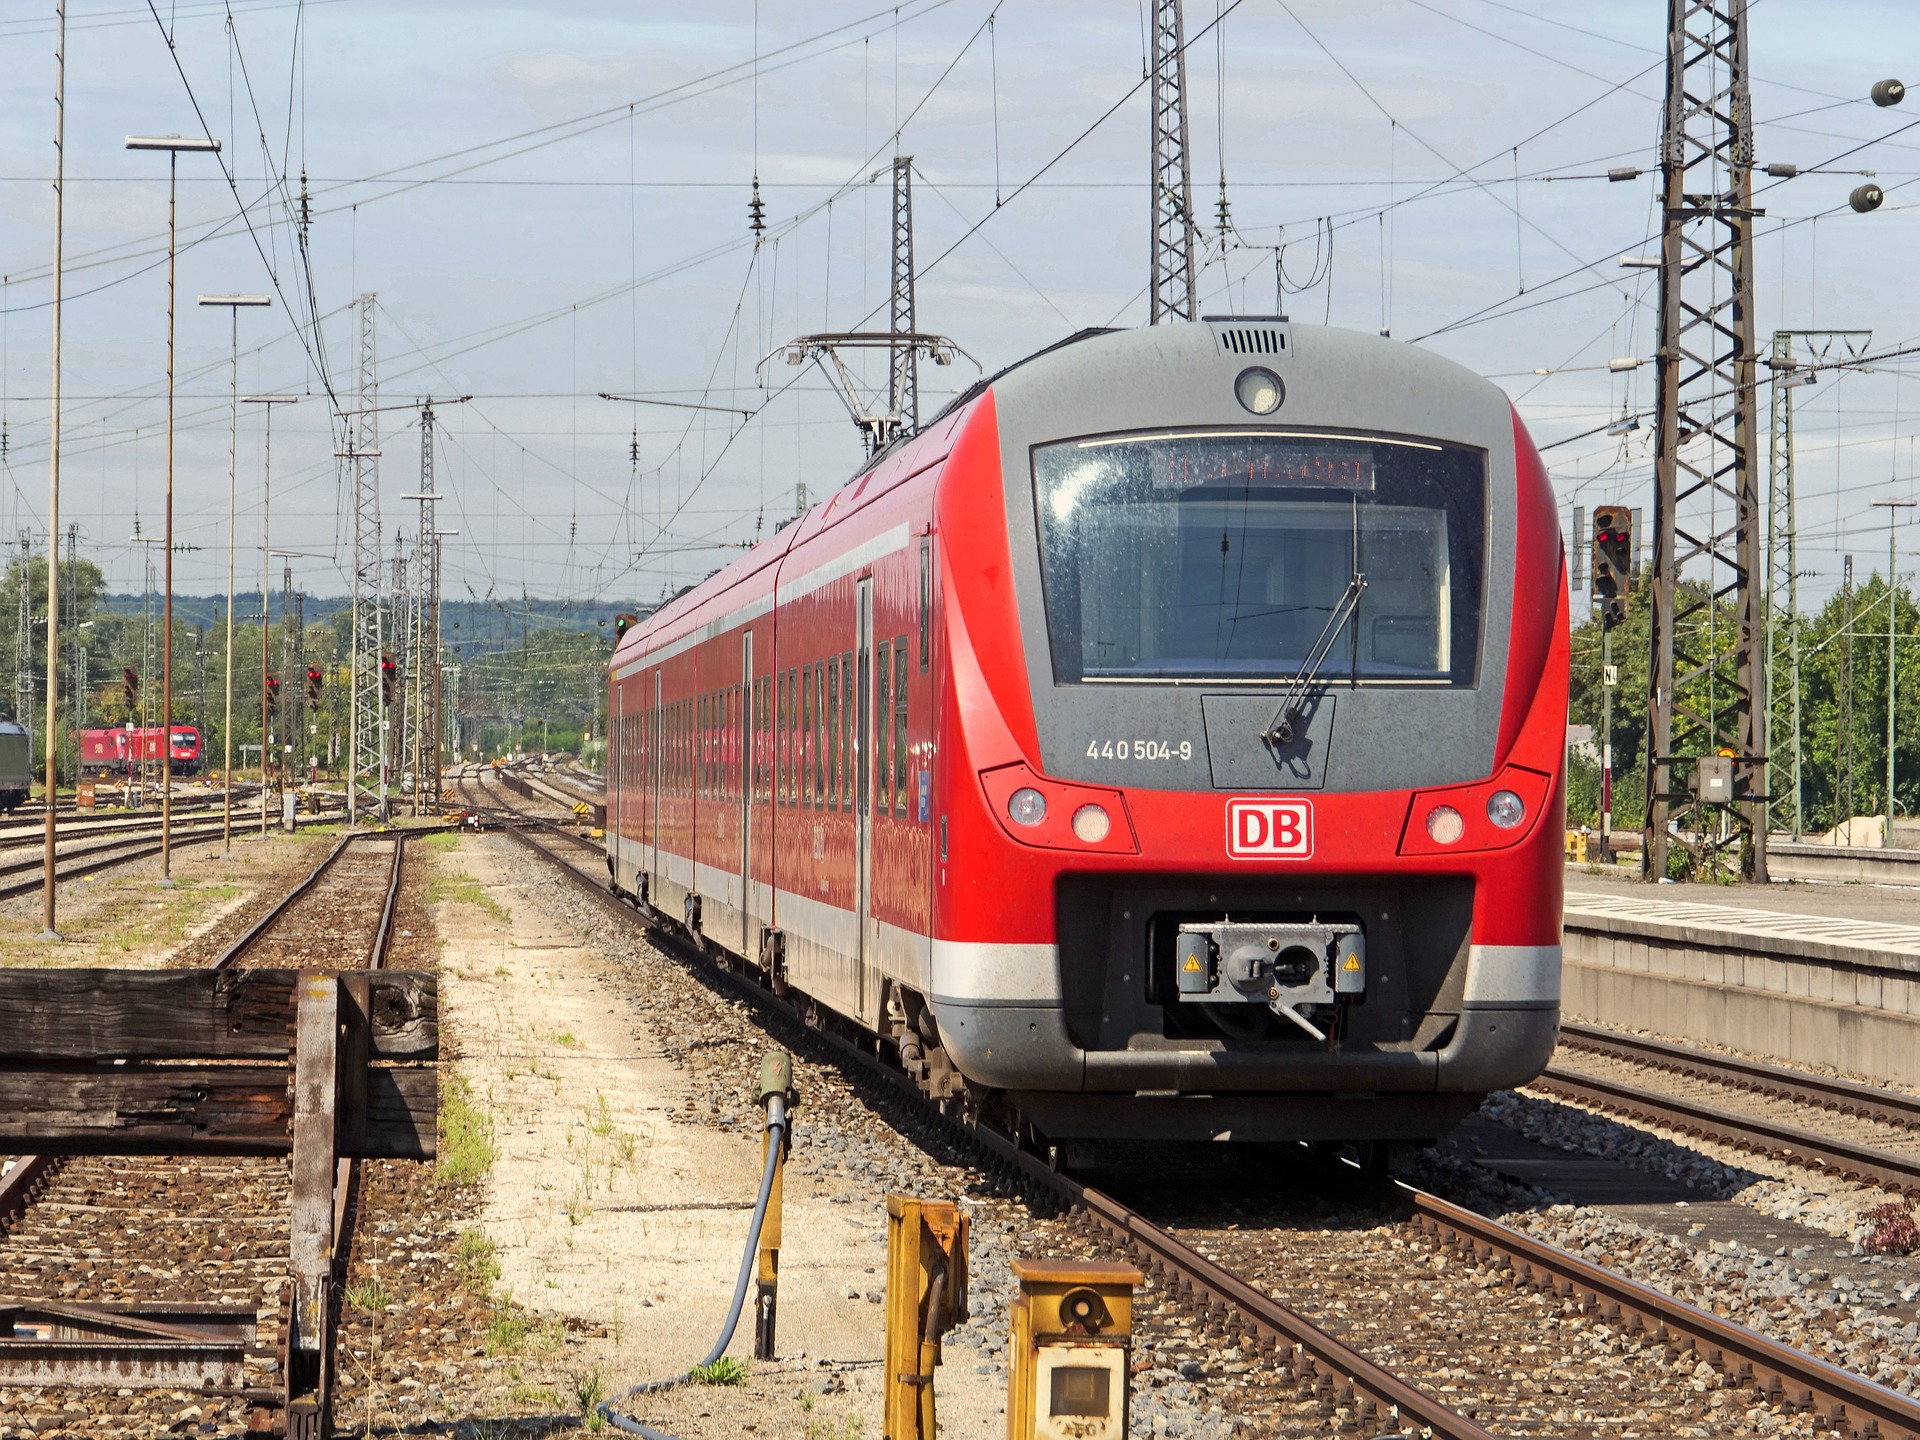  Bahn - Foto: Pixabay.com - Erich Westendarp 